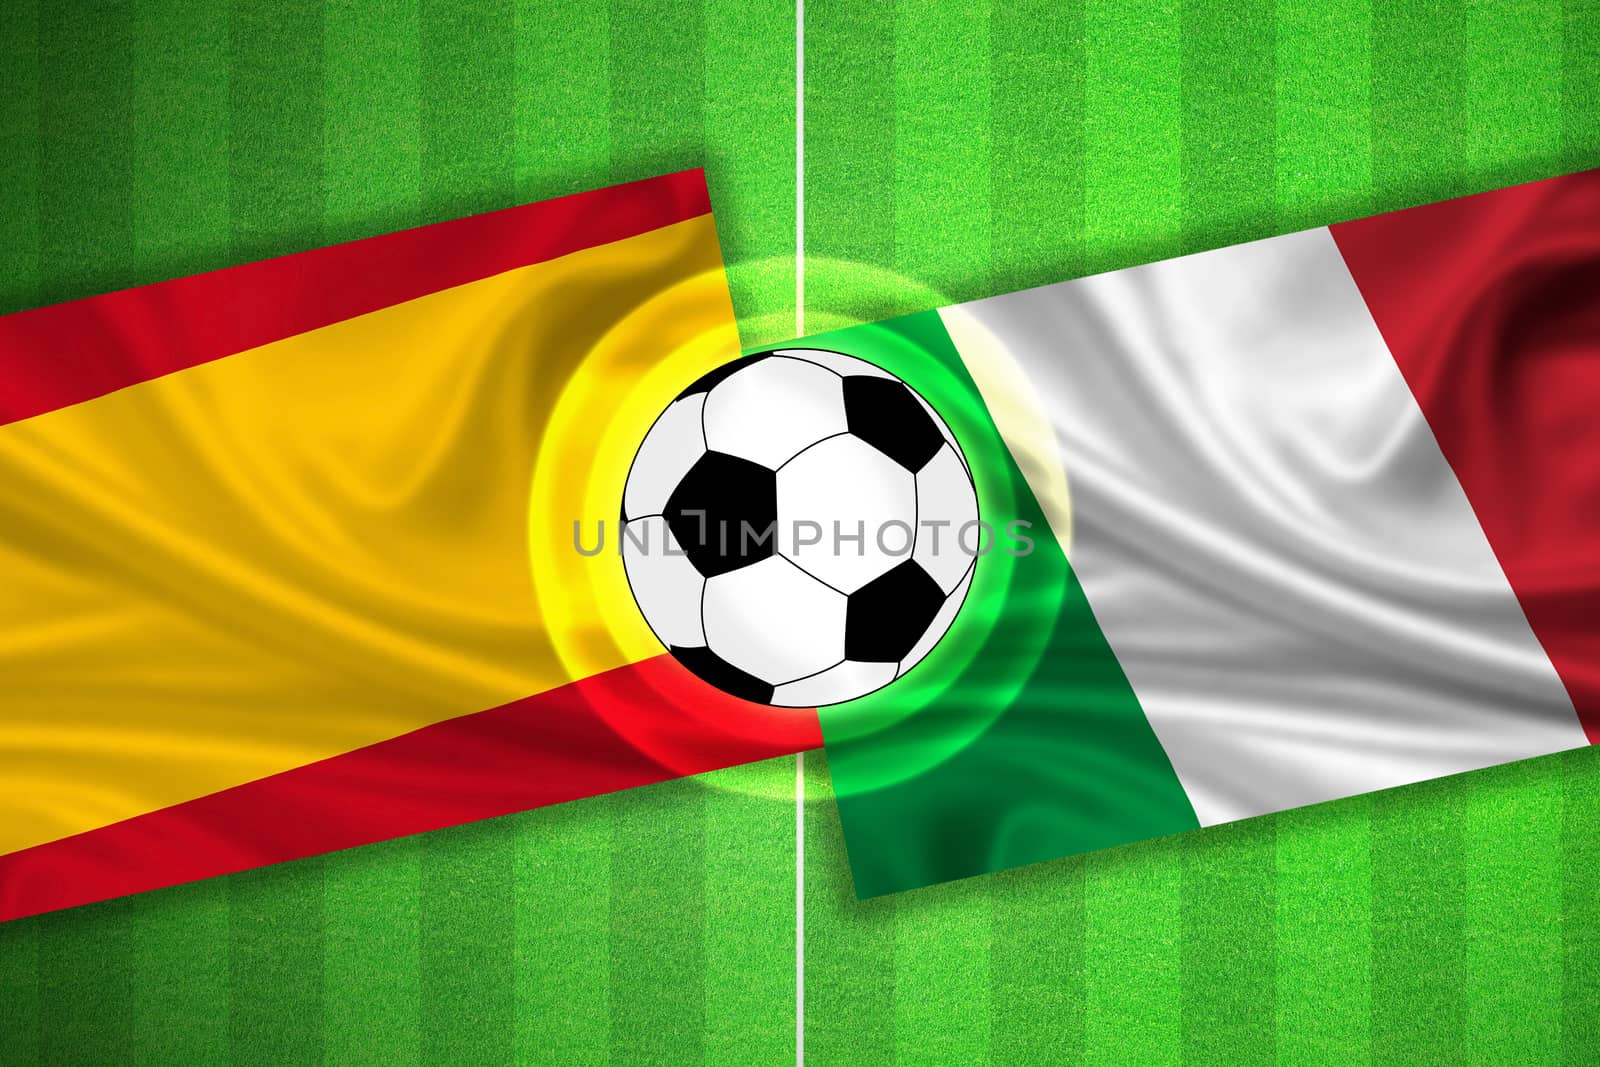 Spain - Italy - Soccer field with ball by aldorado